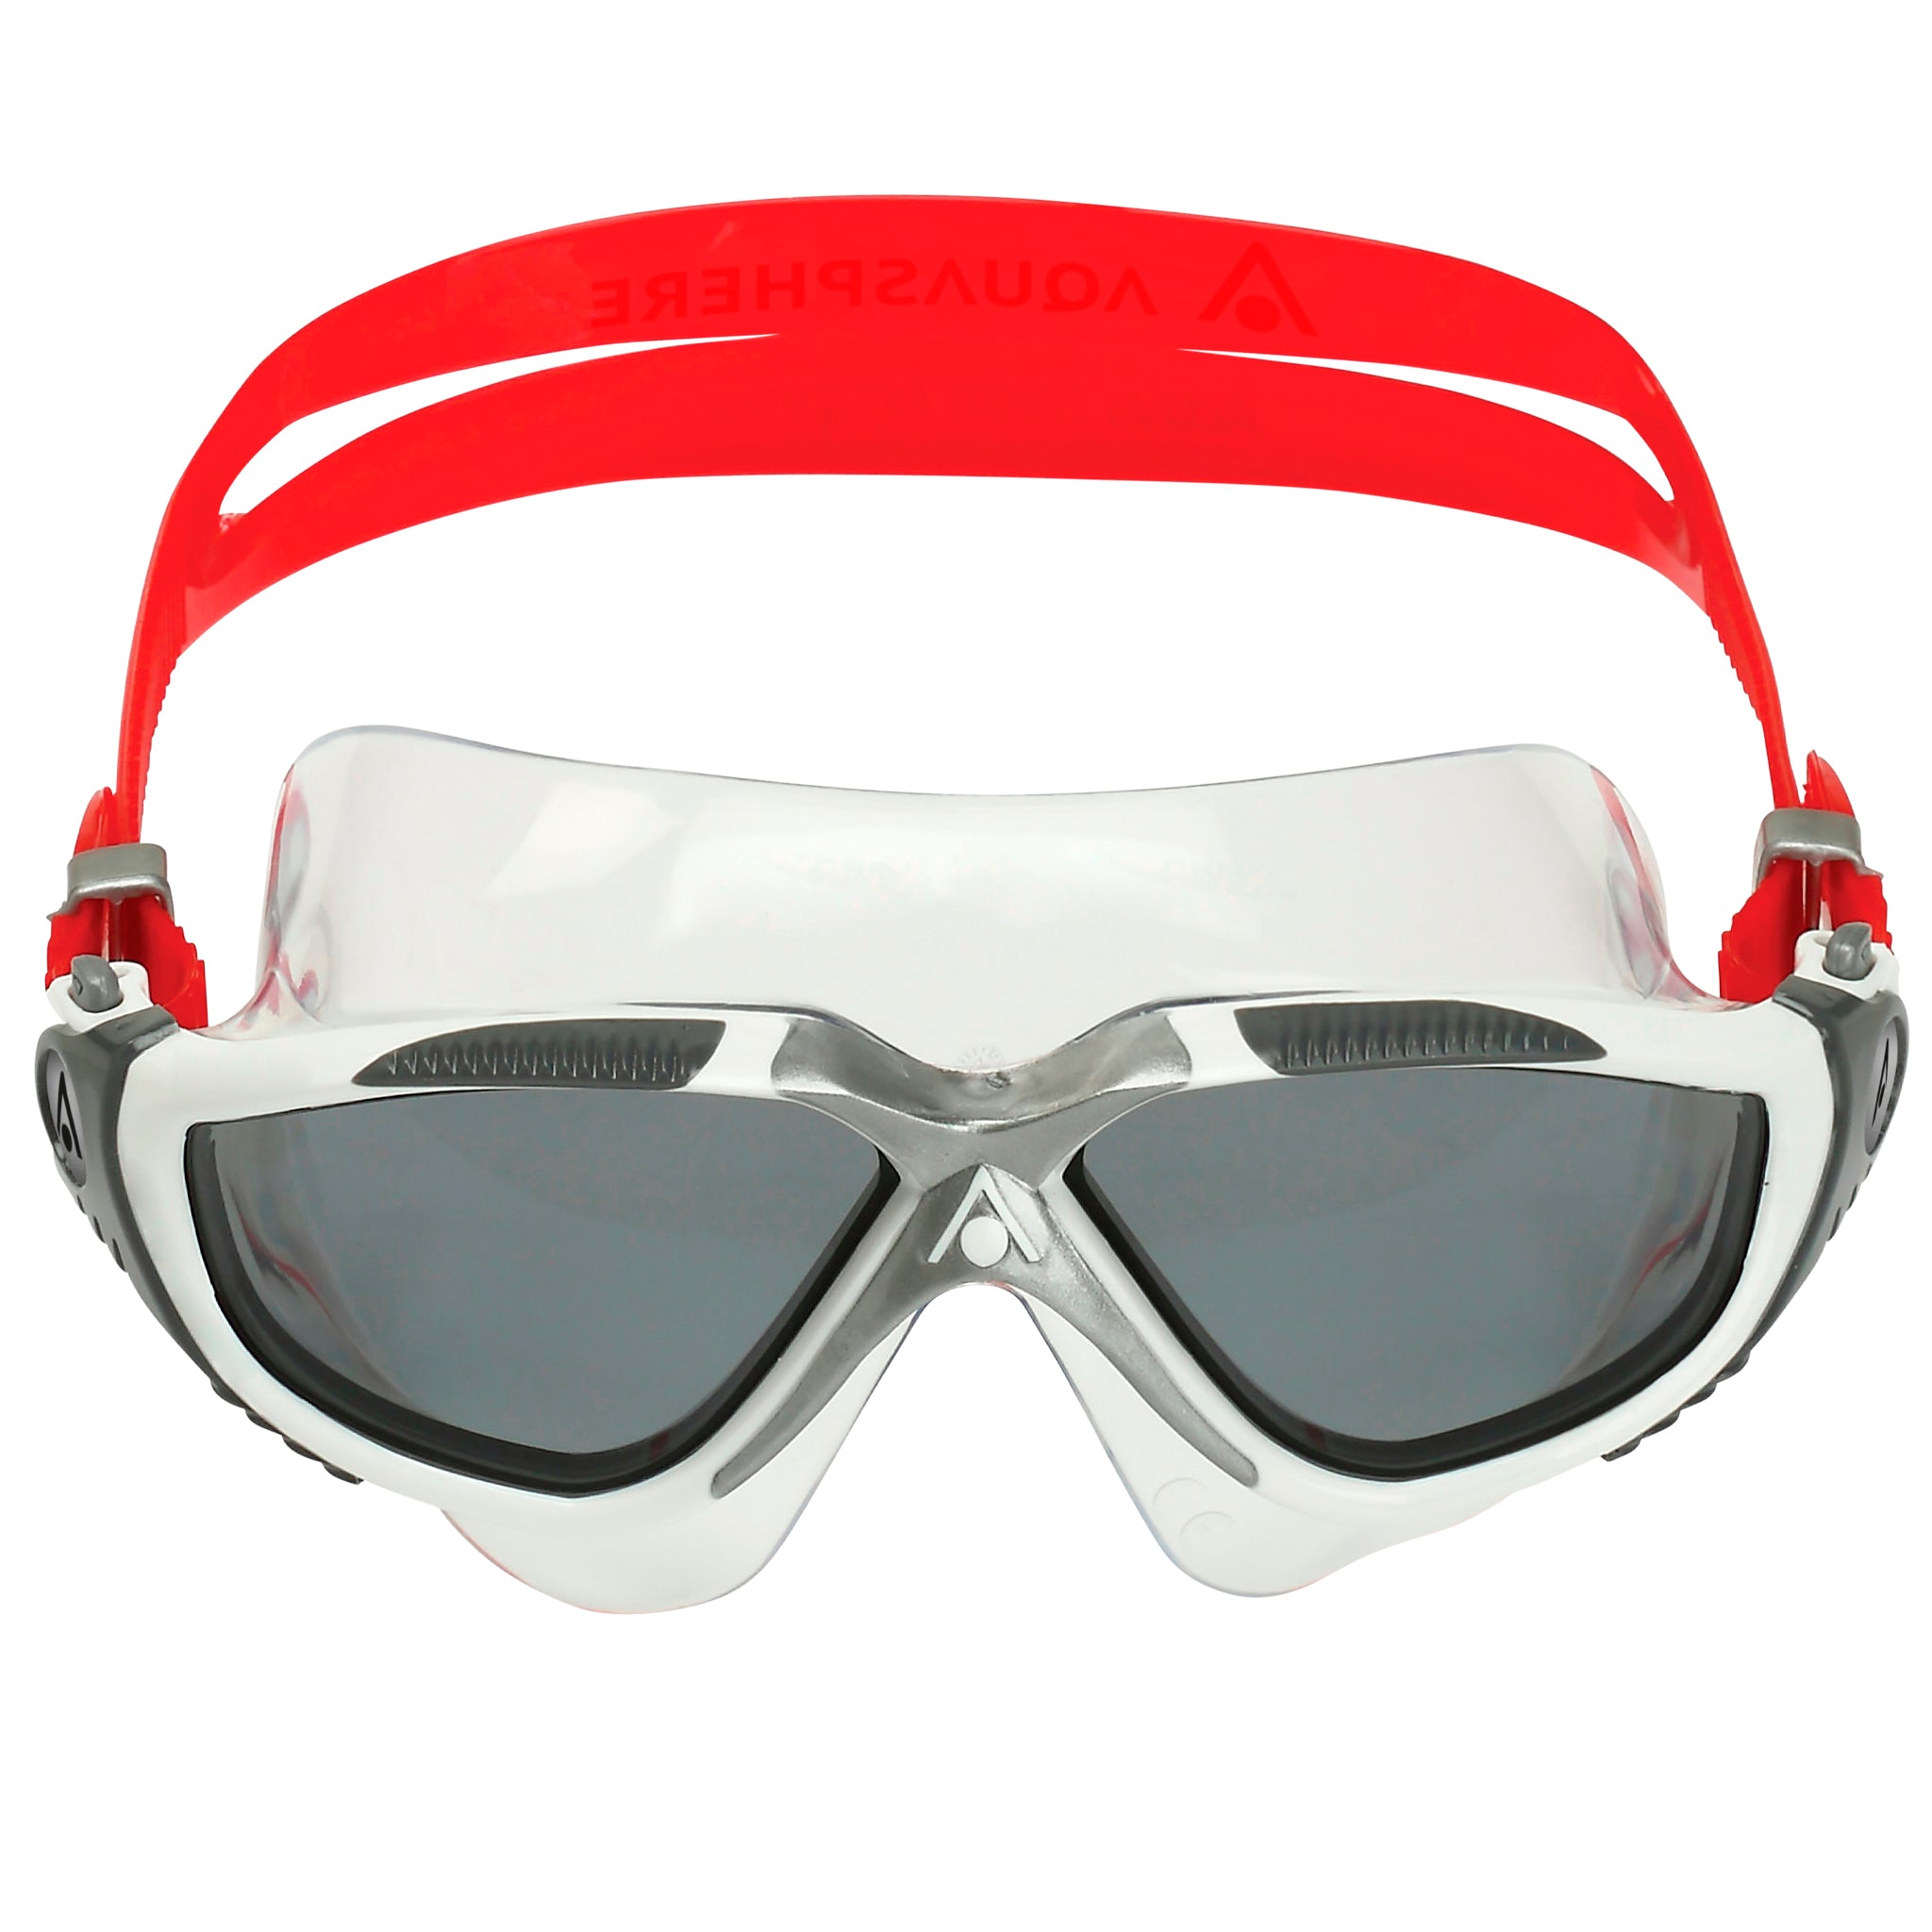 Aquasphere Vista Swimming Goggles Mask Smoke Tinted Lenses | White/Silver Front